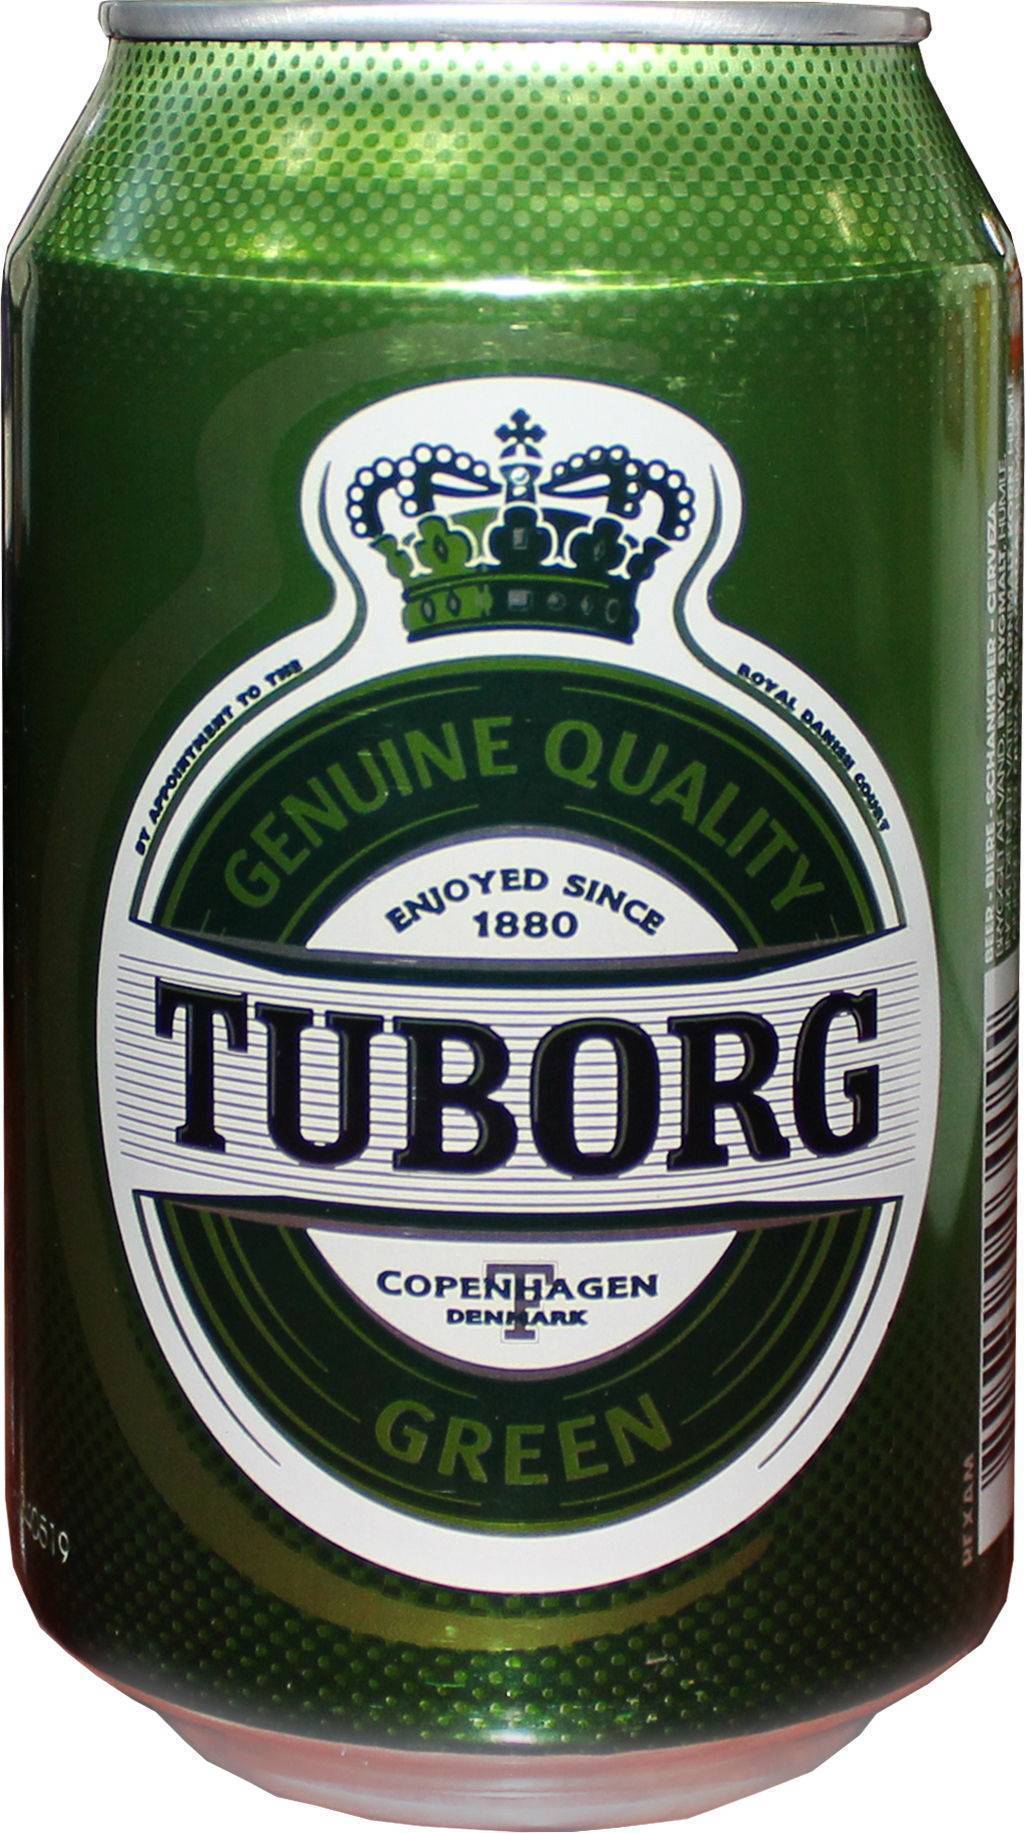 Tuborg green (туборг грин)